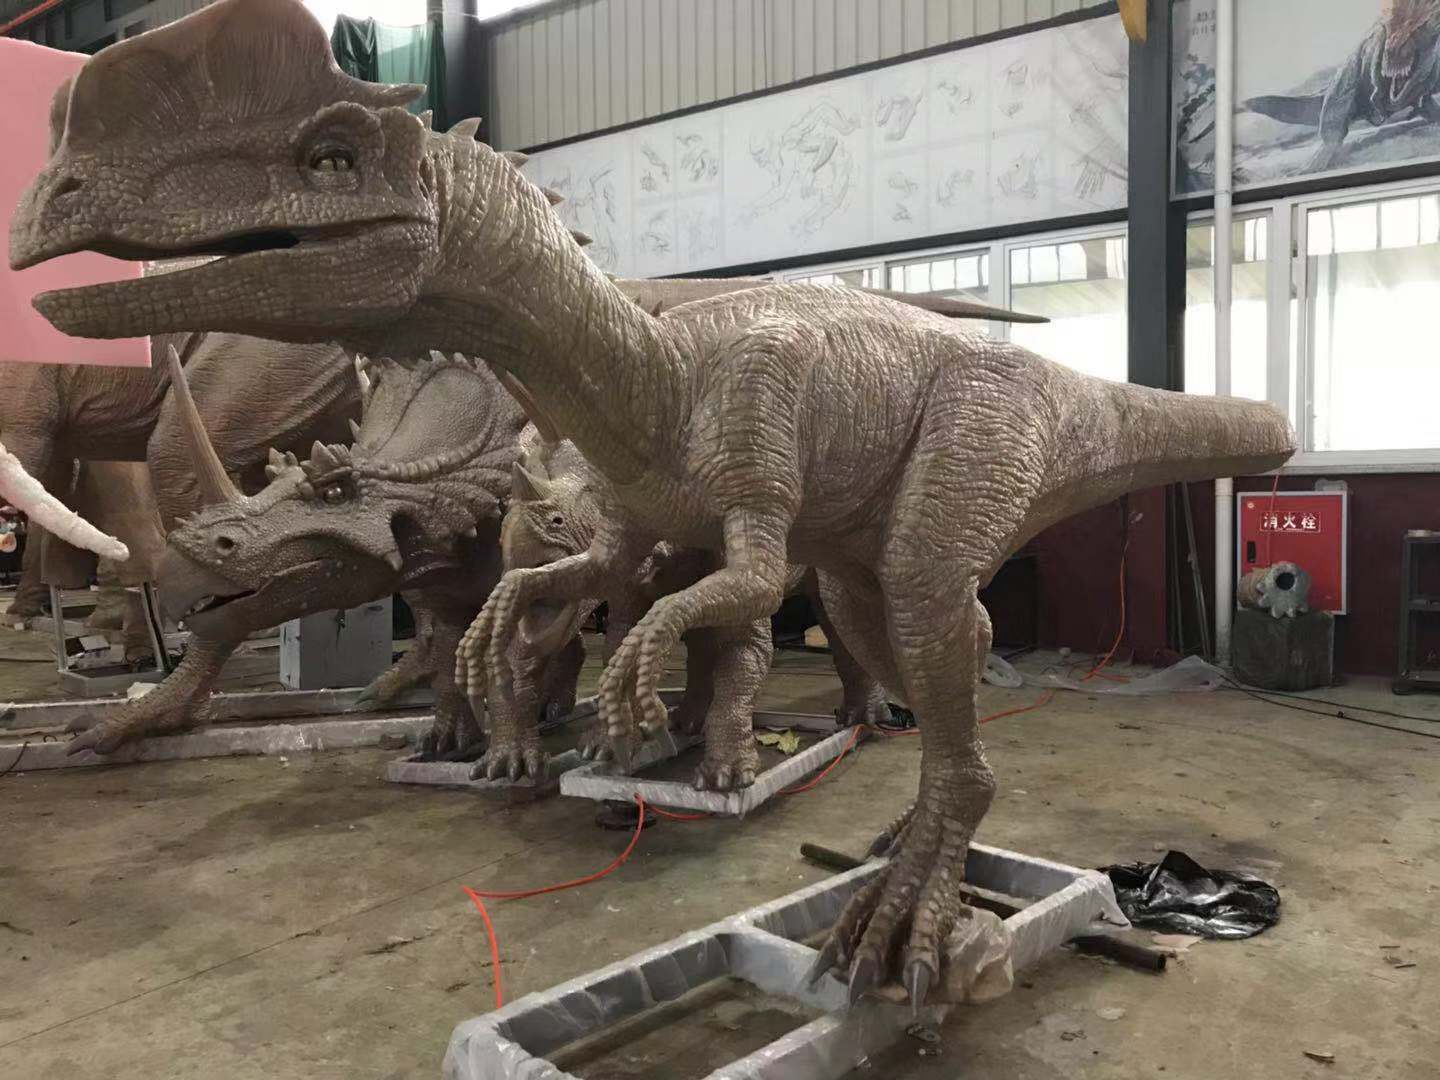 The world's largest dinosaur ever discovered - the Titanosaurus